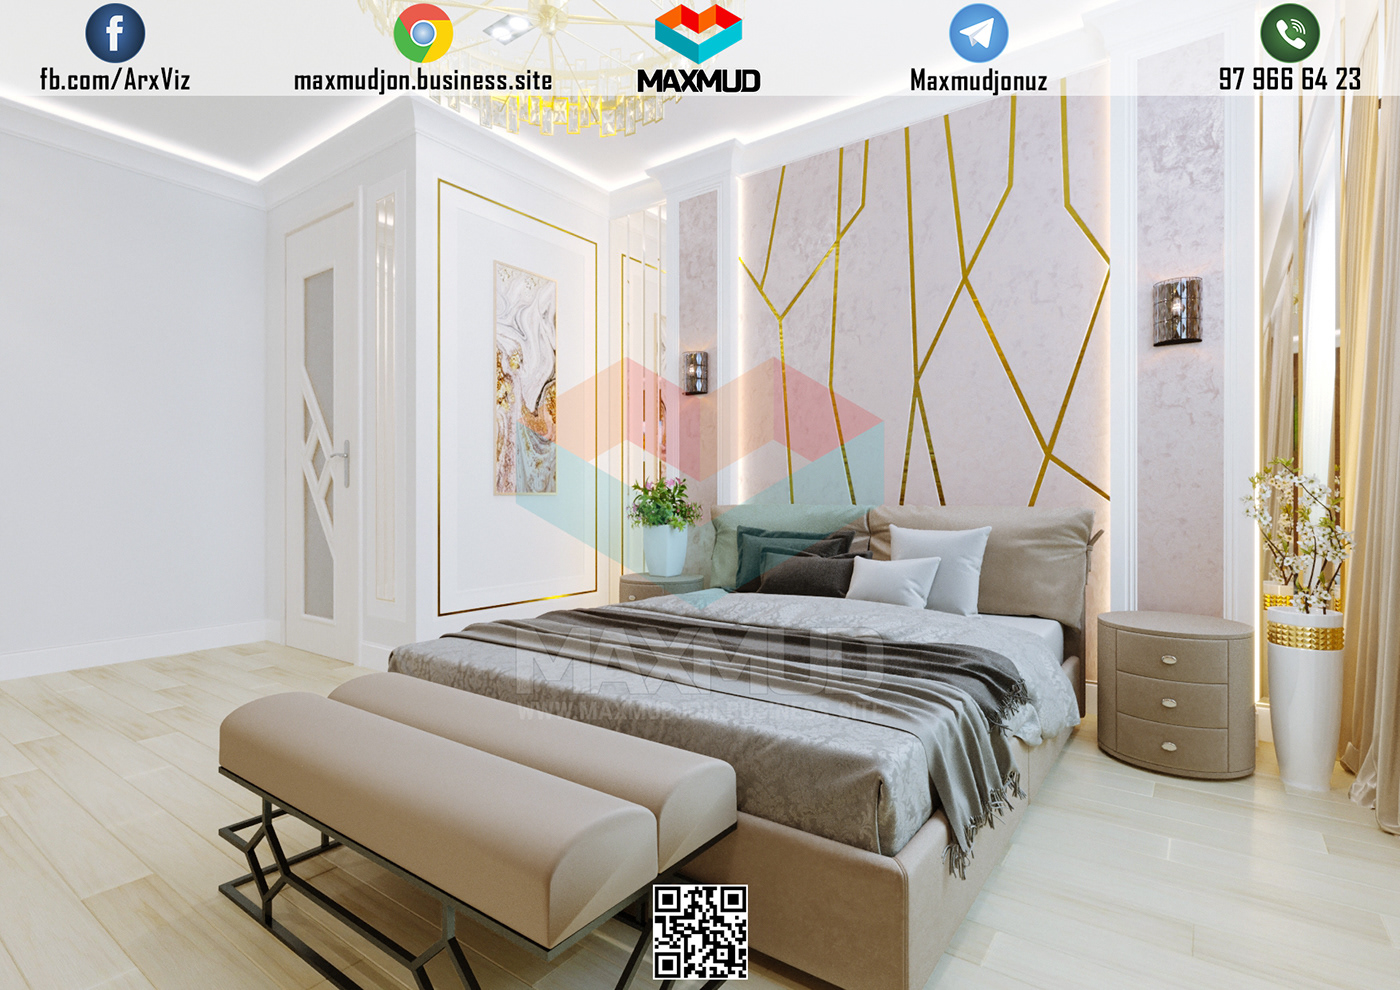 Penthouse
Master Bedroom interior visualization